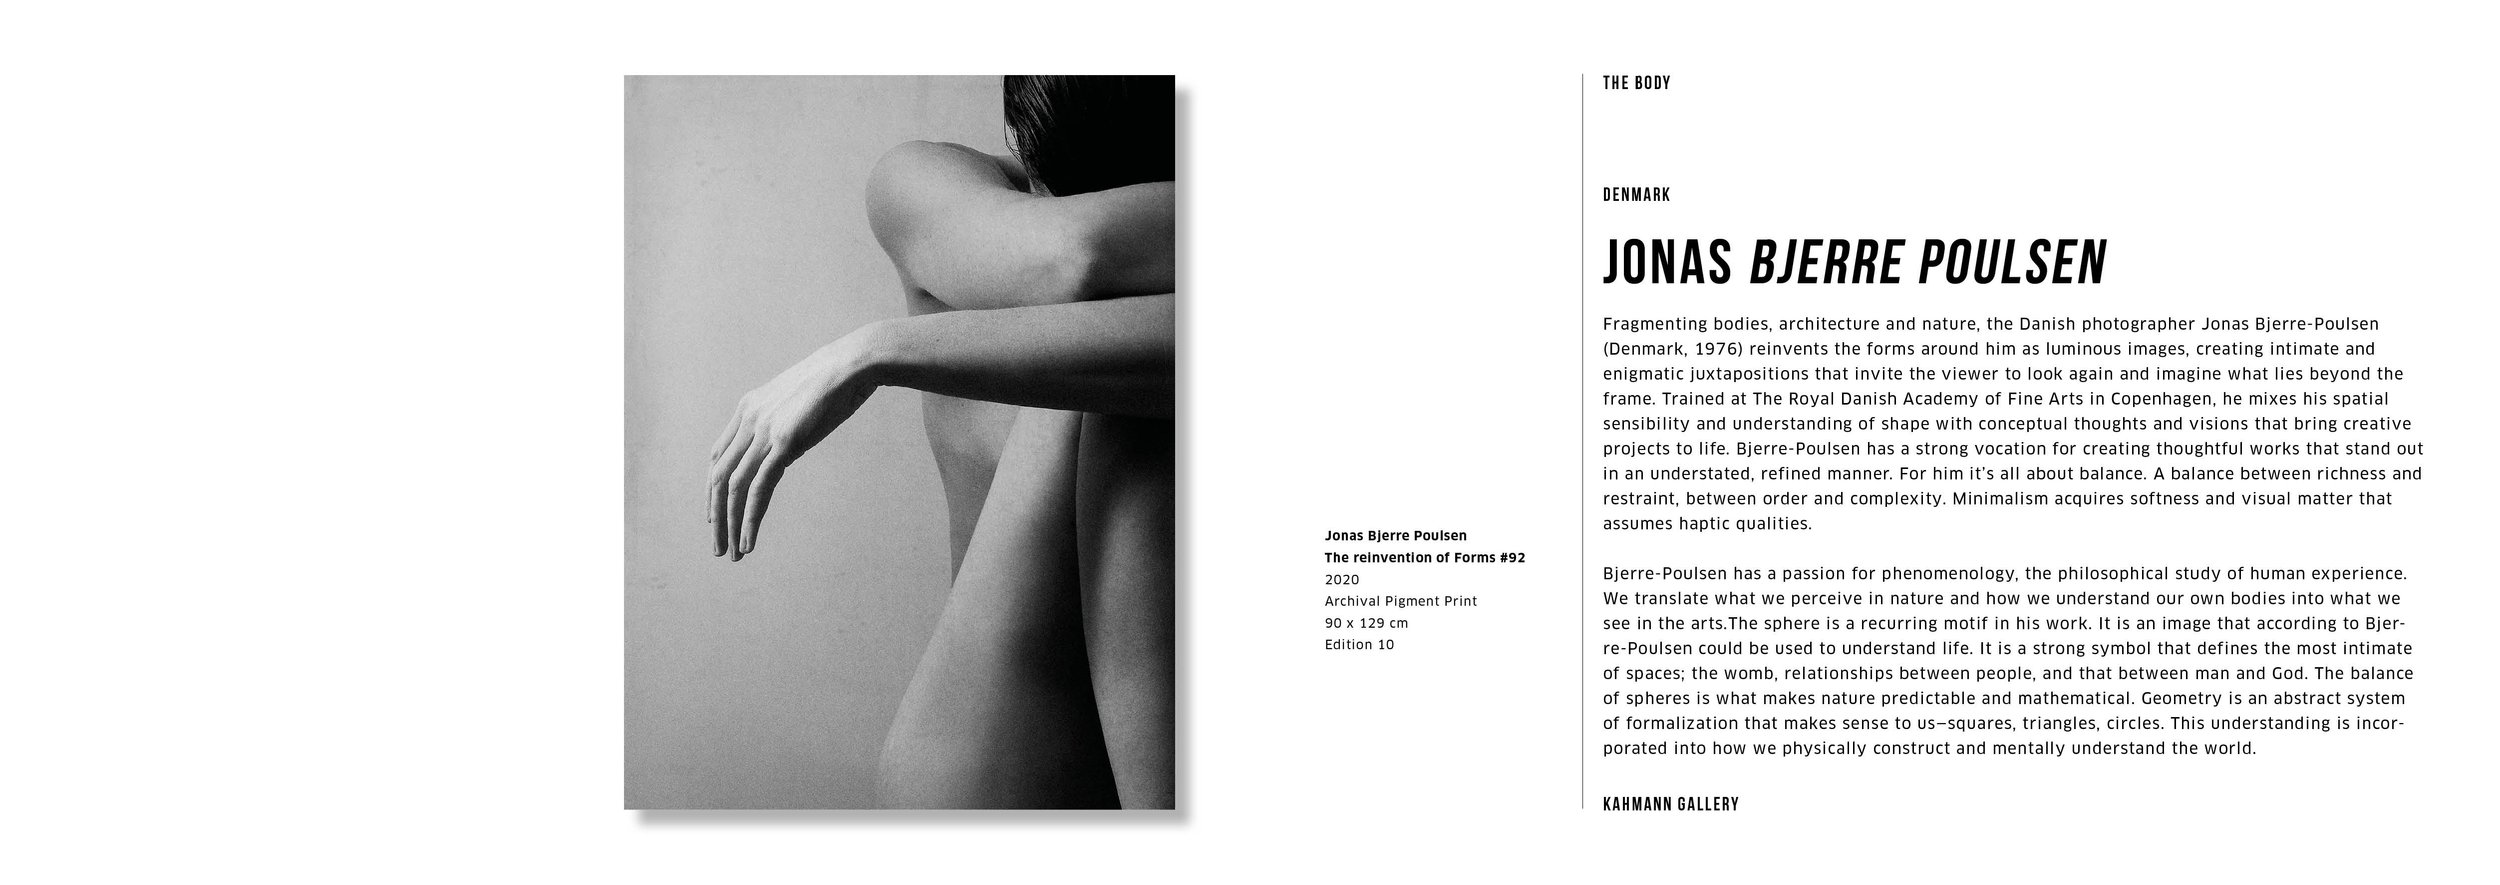 KG Catalogue The Body (11 jan)6.jpg